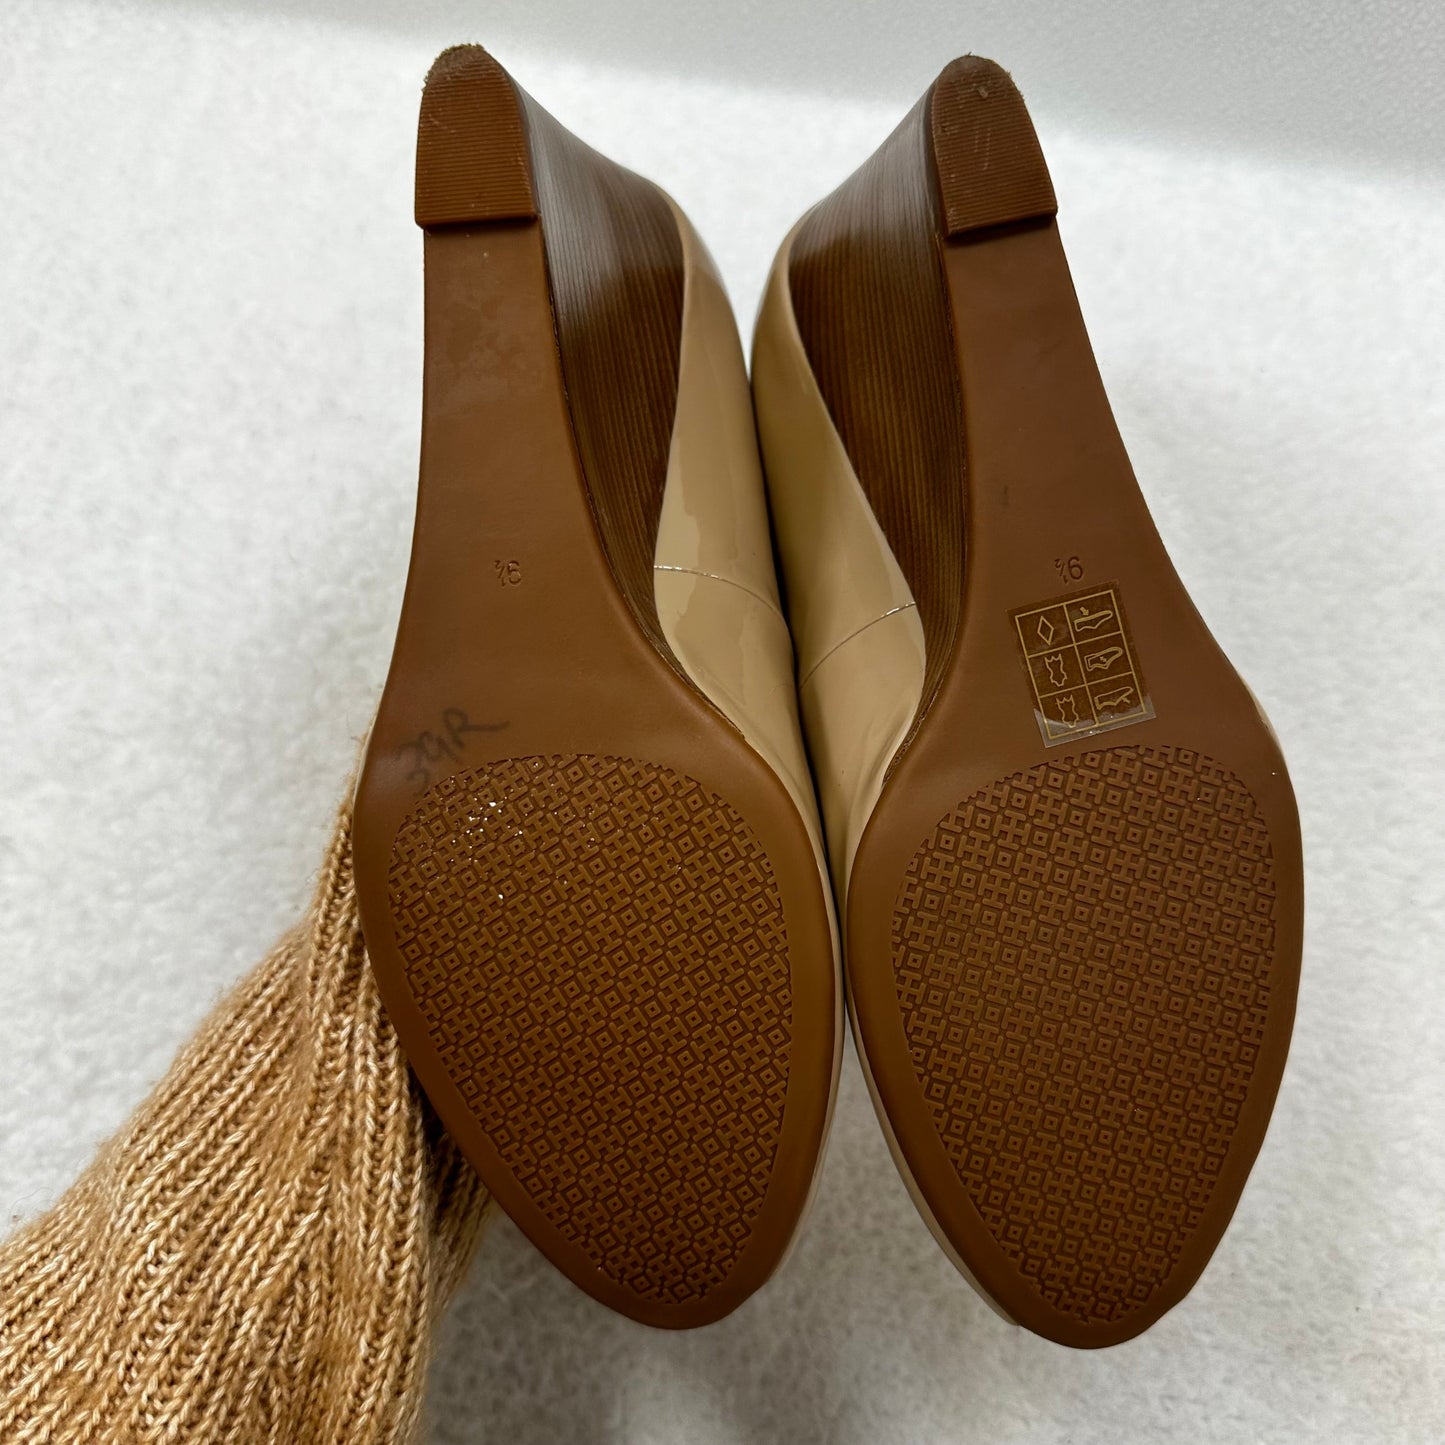 Tan Shoes Heels Wedge Tory Burch, Size 9.5